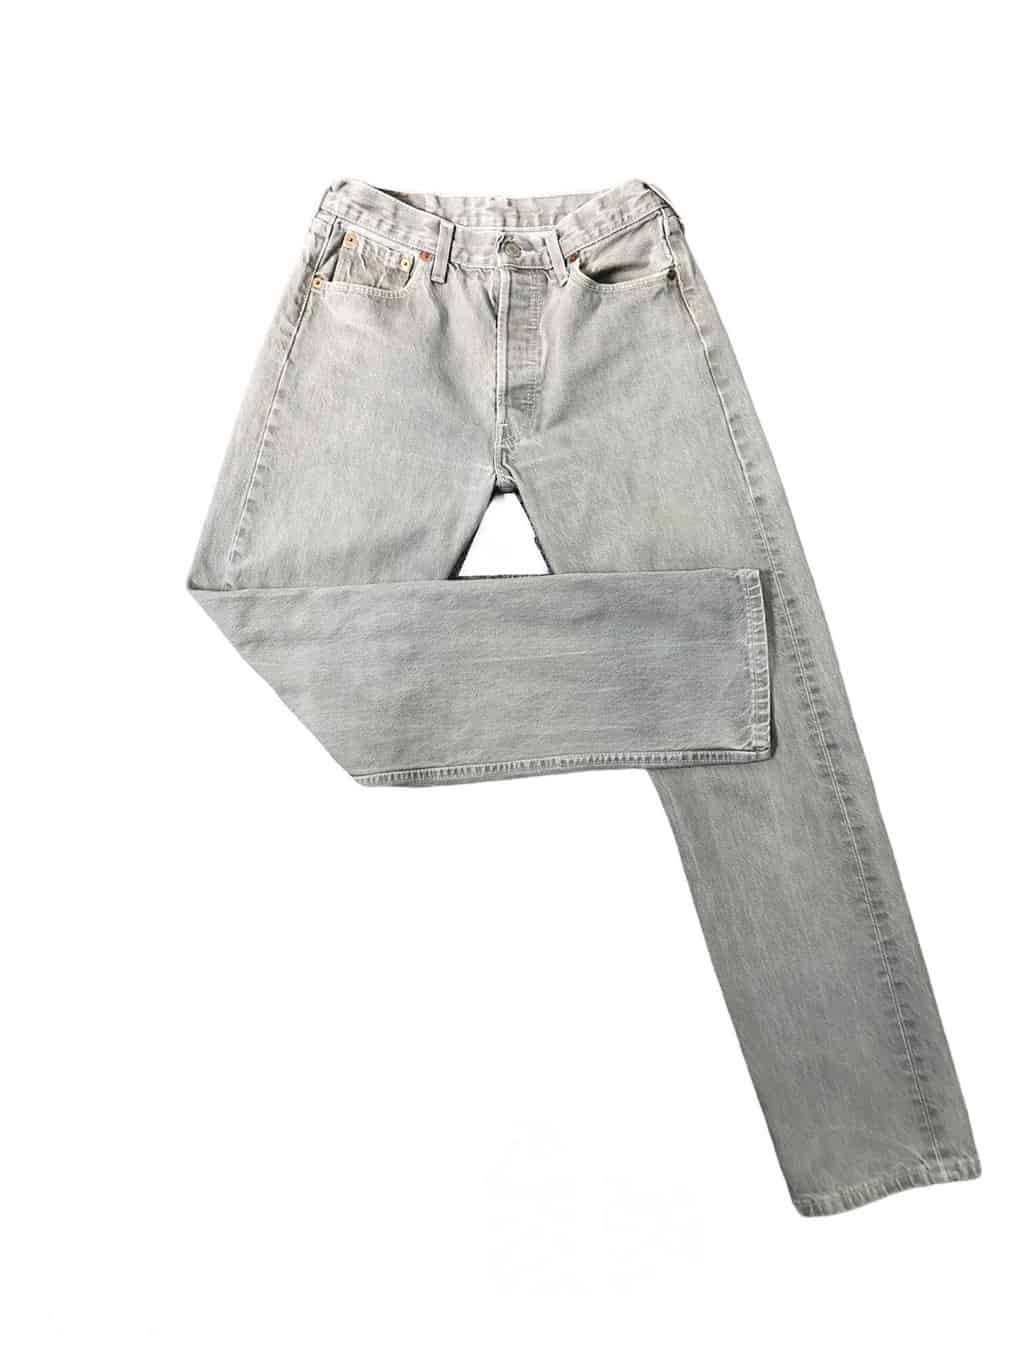 1990s Vintage Rare Levis 501xx Jeans in Light Grey Denim - W28 x L30 - St  Cyr Vintage